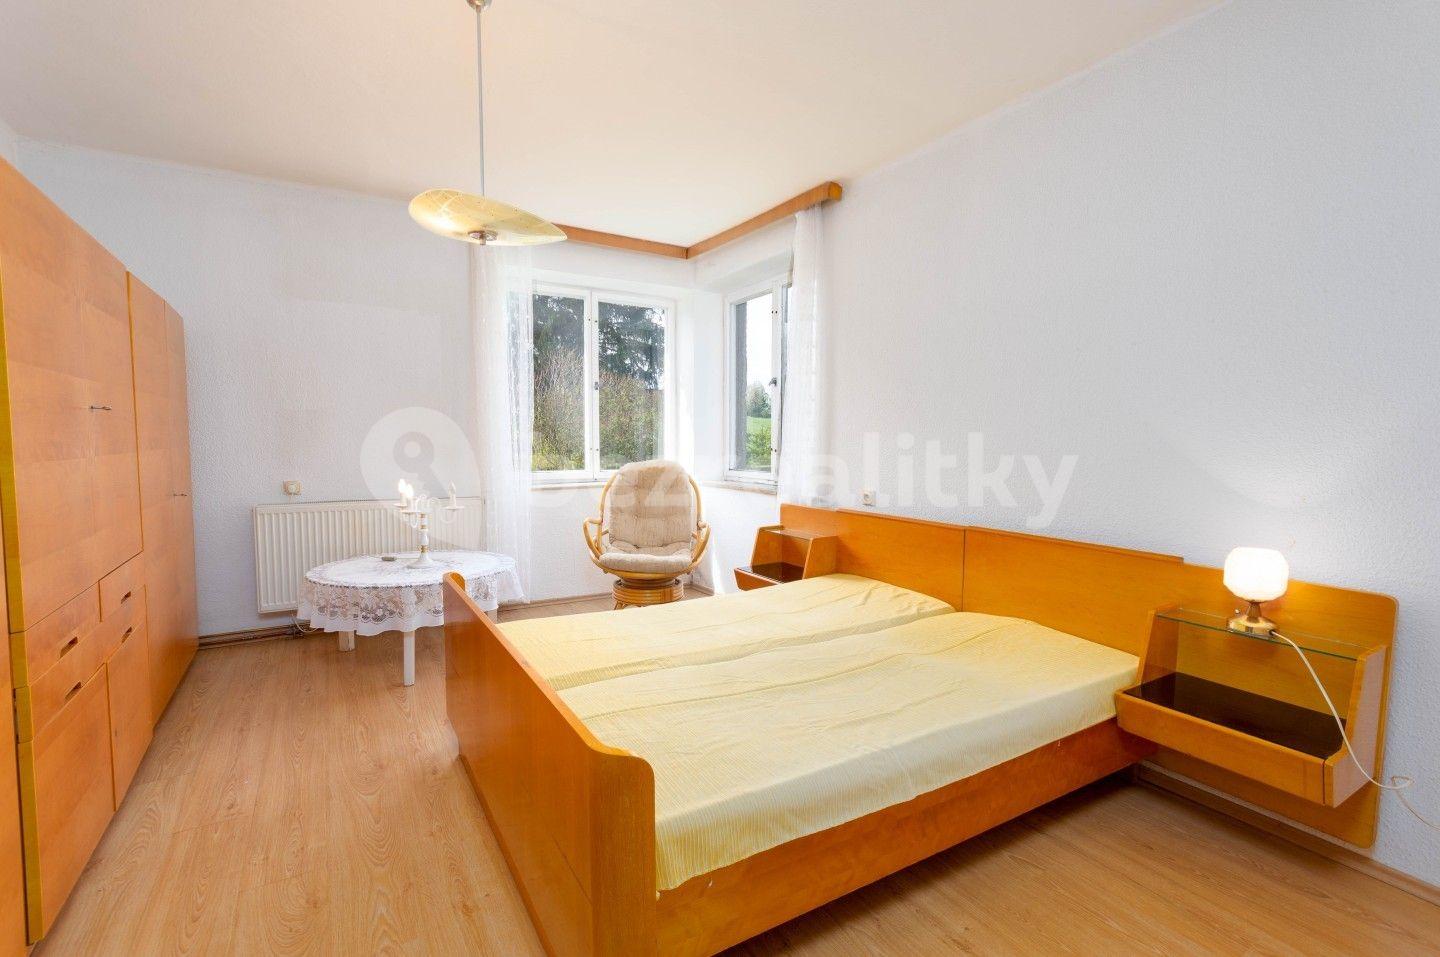 4 bedroom flat for sale, 166 m², Komenského, Rýmařov, Moravskoslezský Region